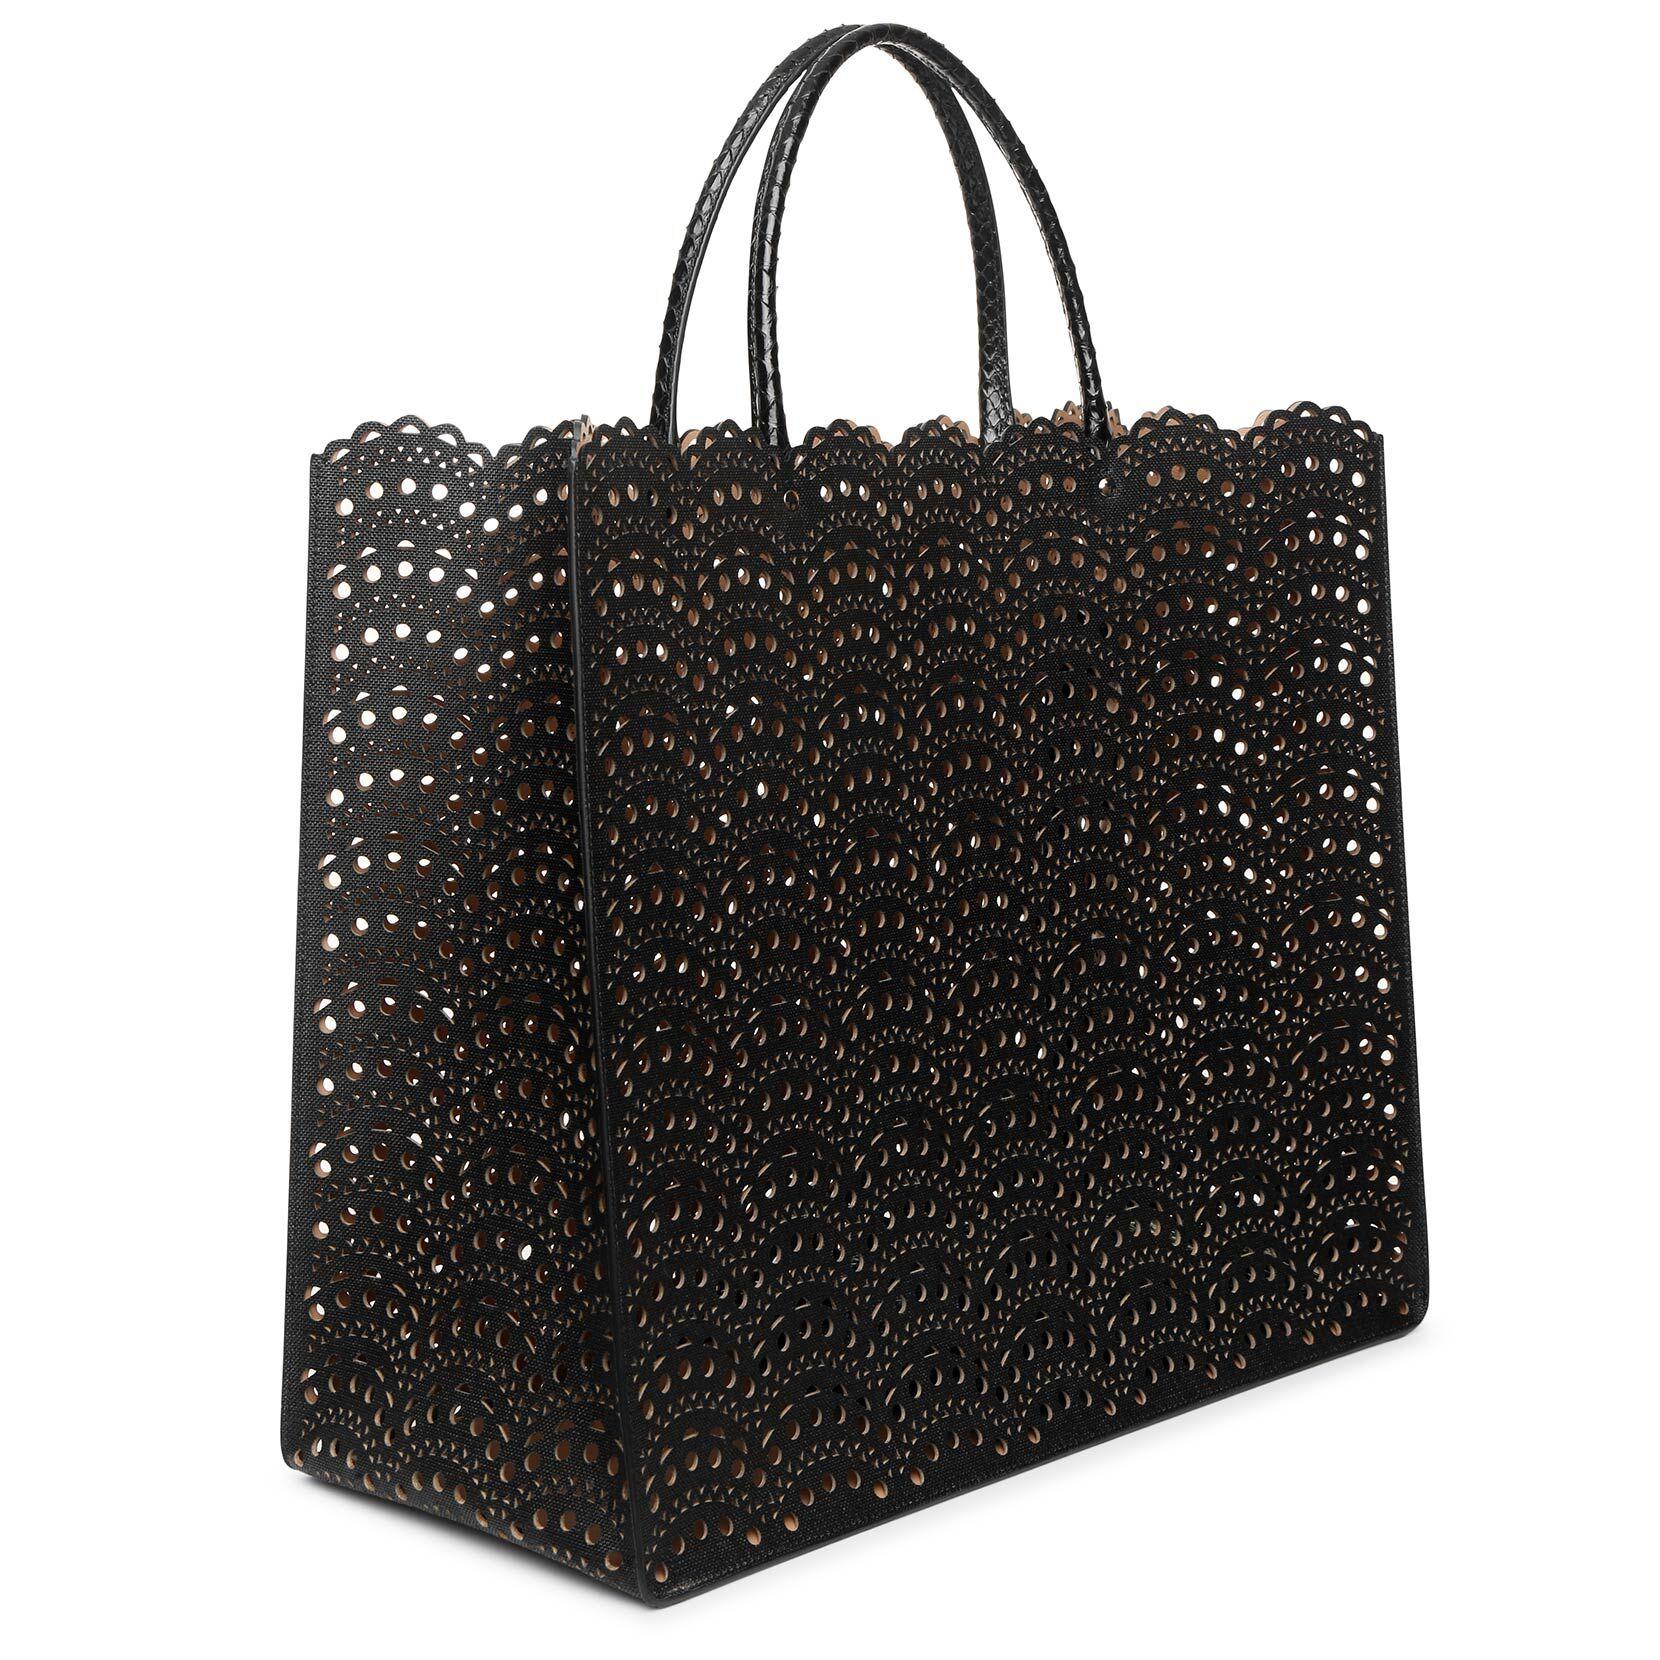 Alaïa Leather Garance Large Black Tote Bag - Lyst